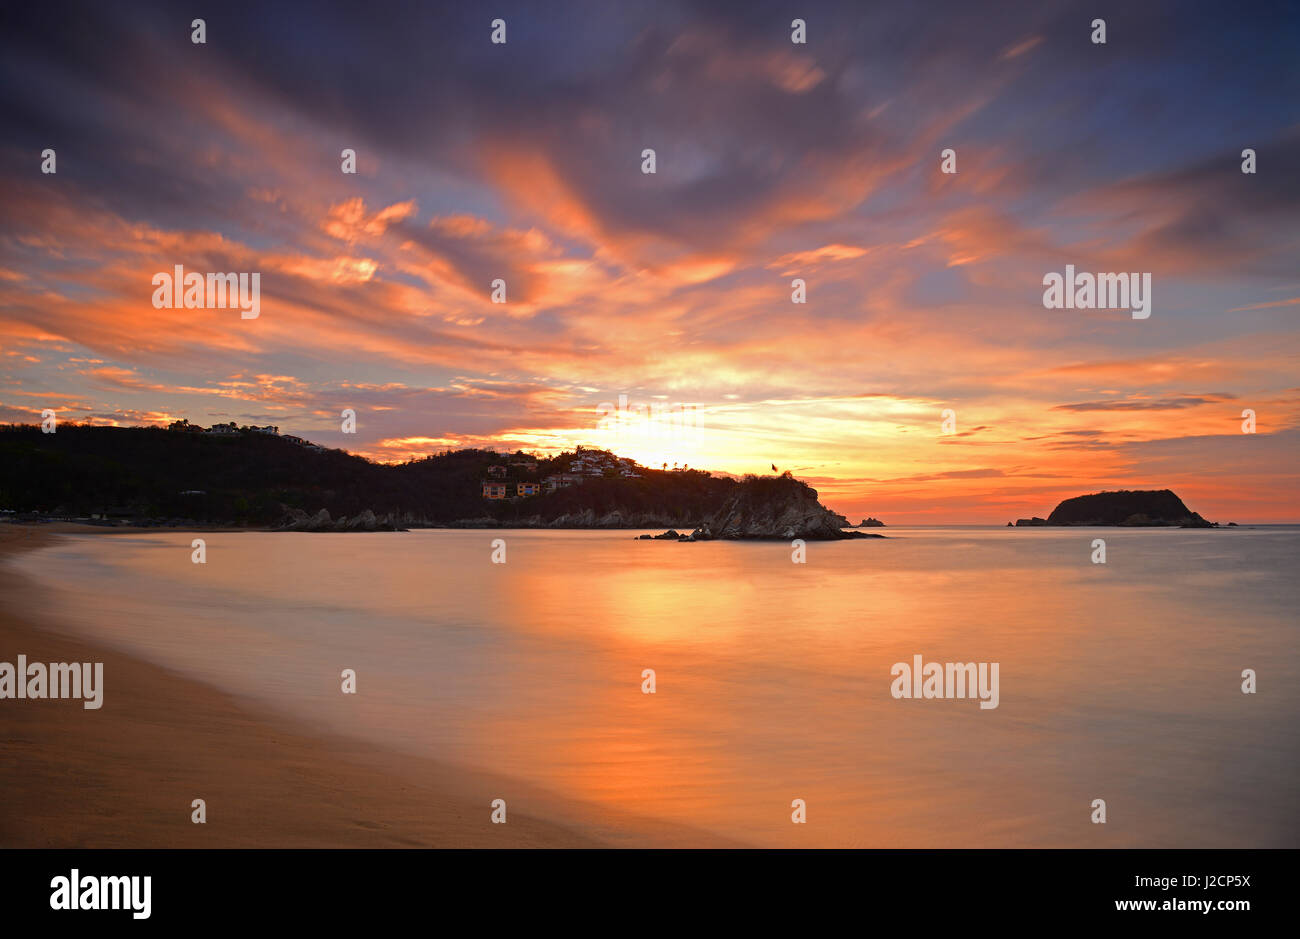 Sunrise at Tangolunda bay in the famous beach resort of Huatulco, Mexico. Stock Photo